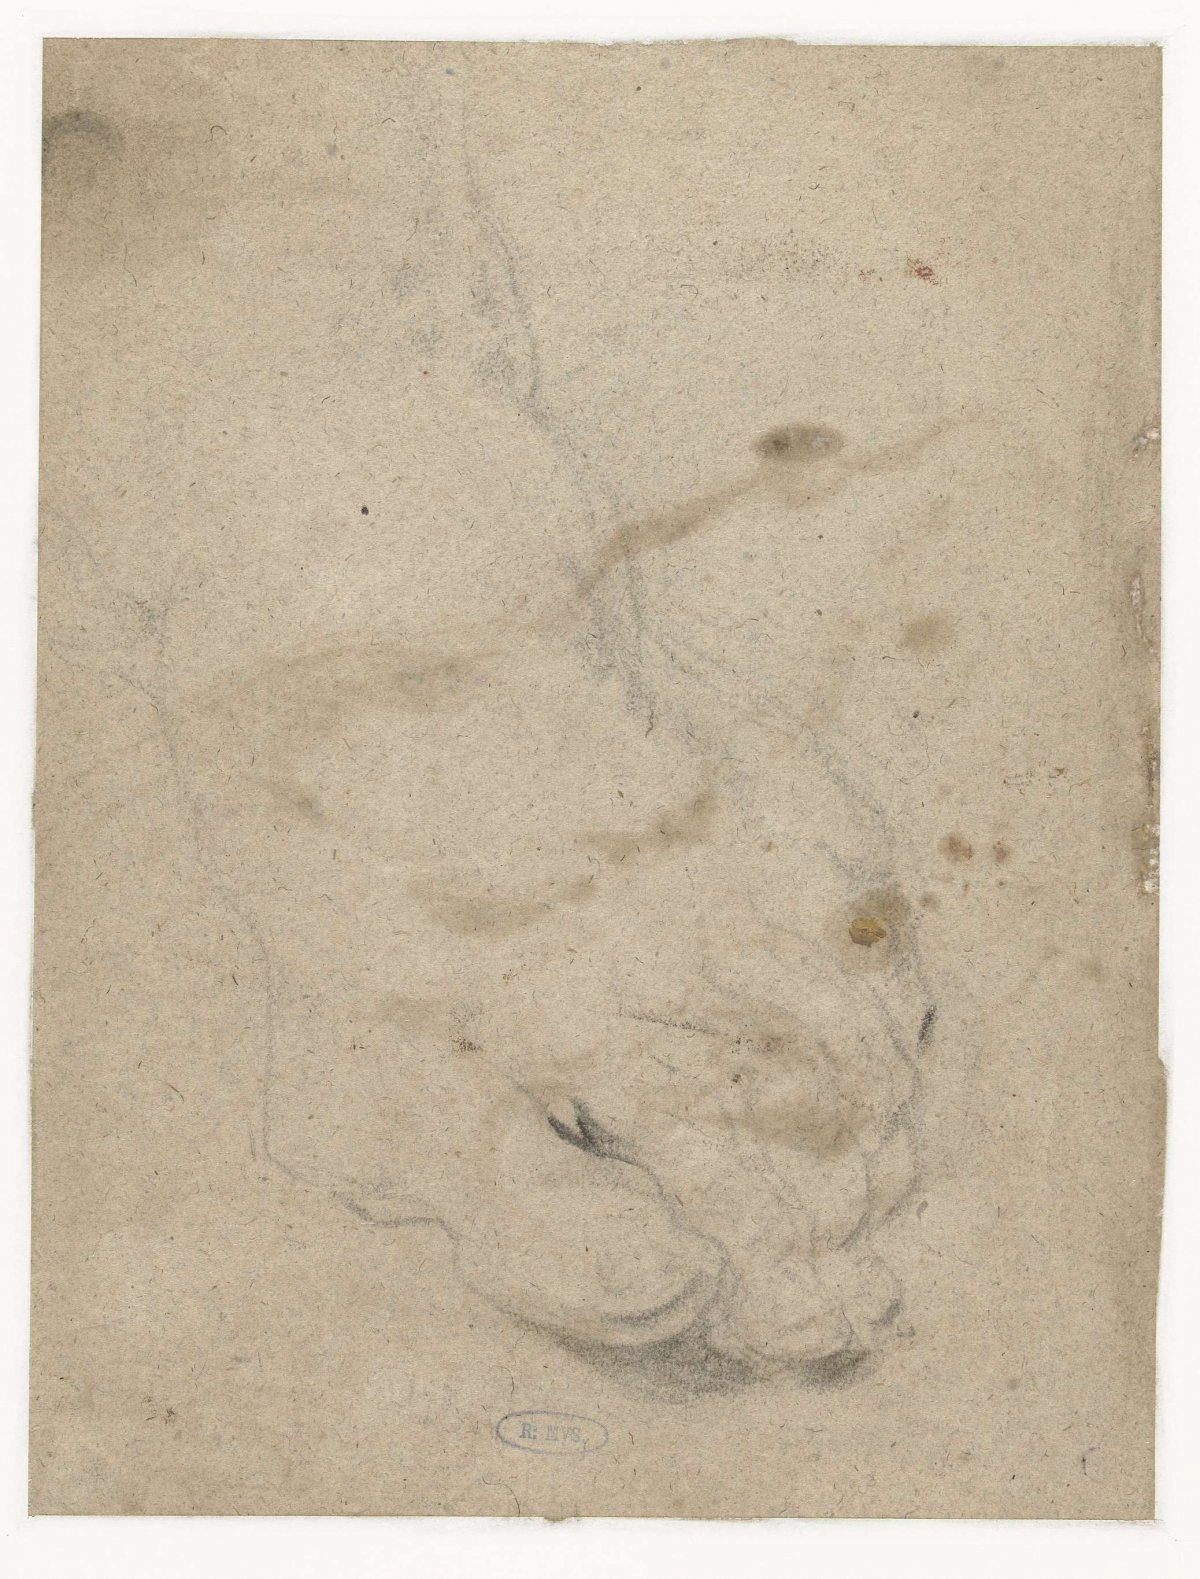 Voet, Anthony van Dyck, 1610 - 1641